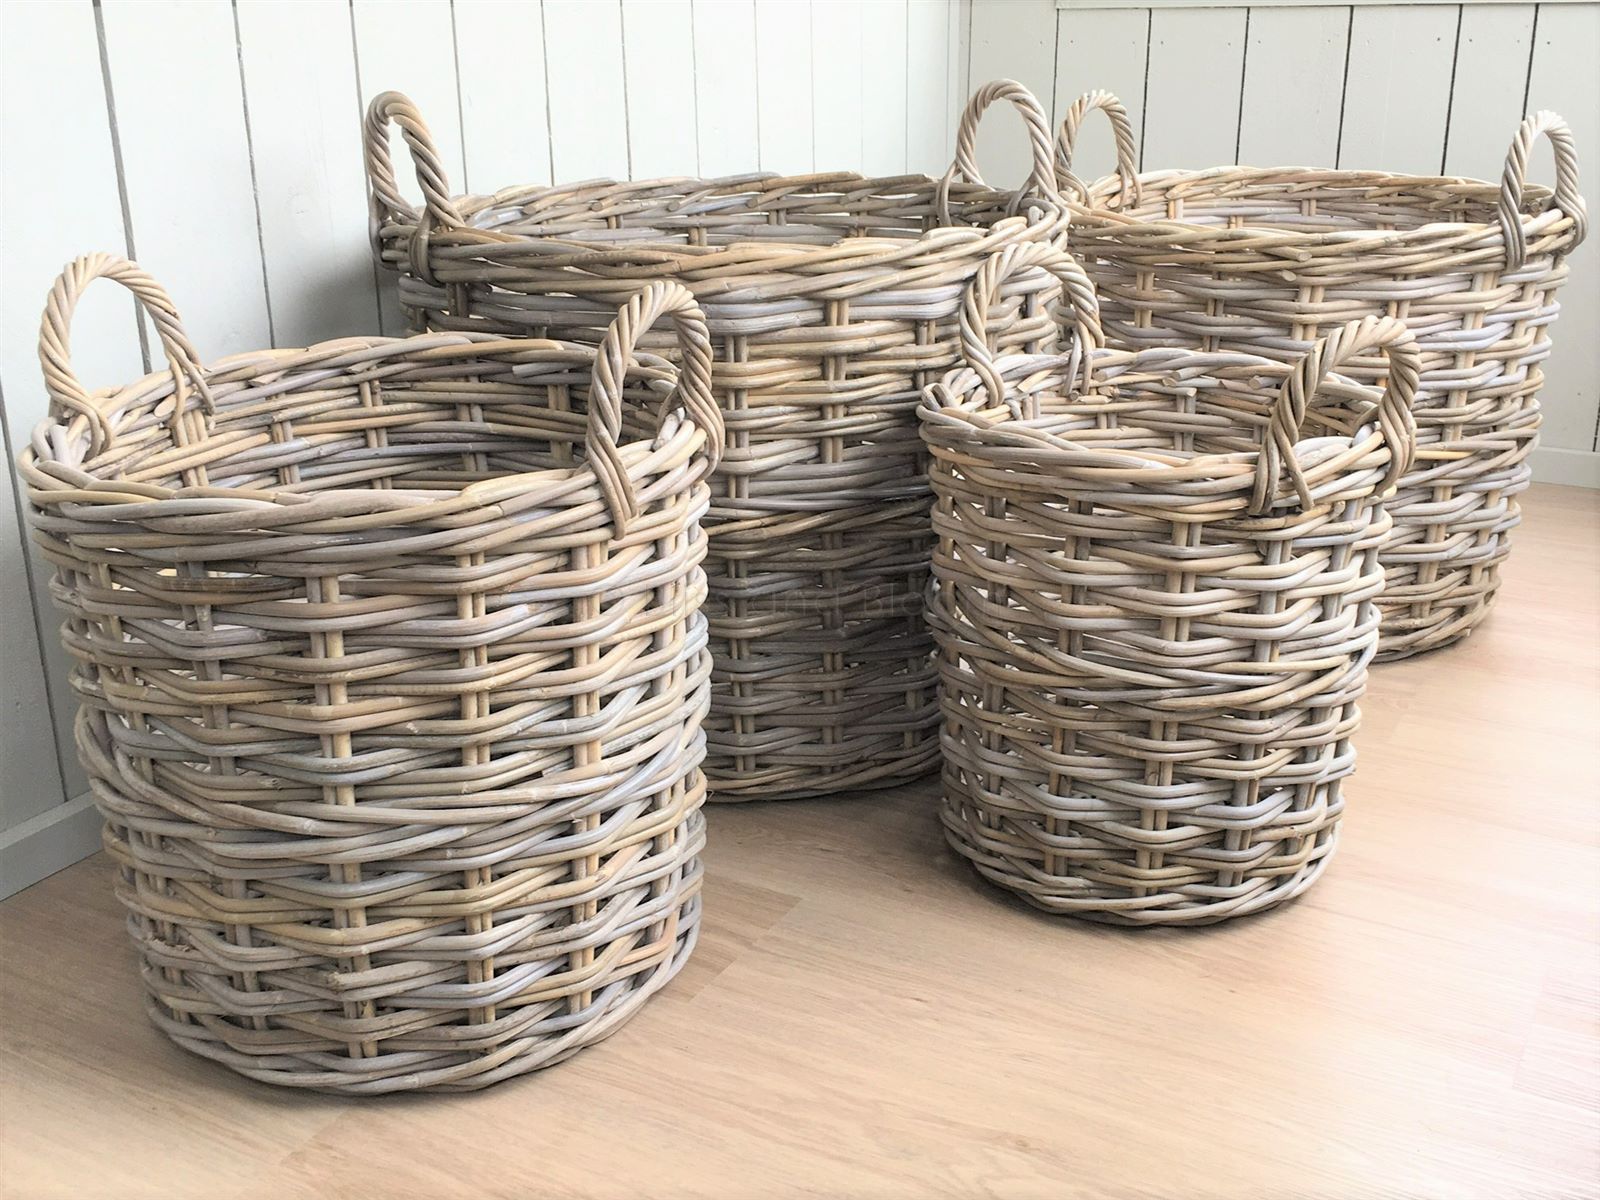 Grey & Buff Round Rattan Laundry Basket - The Basket Company